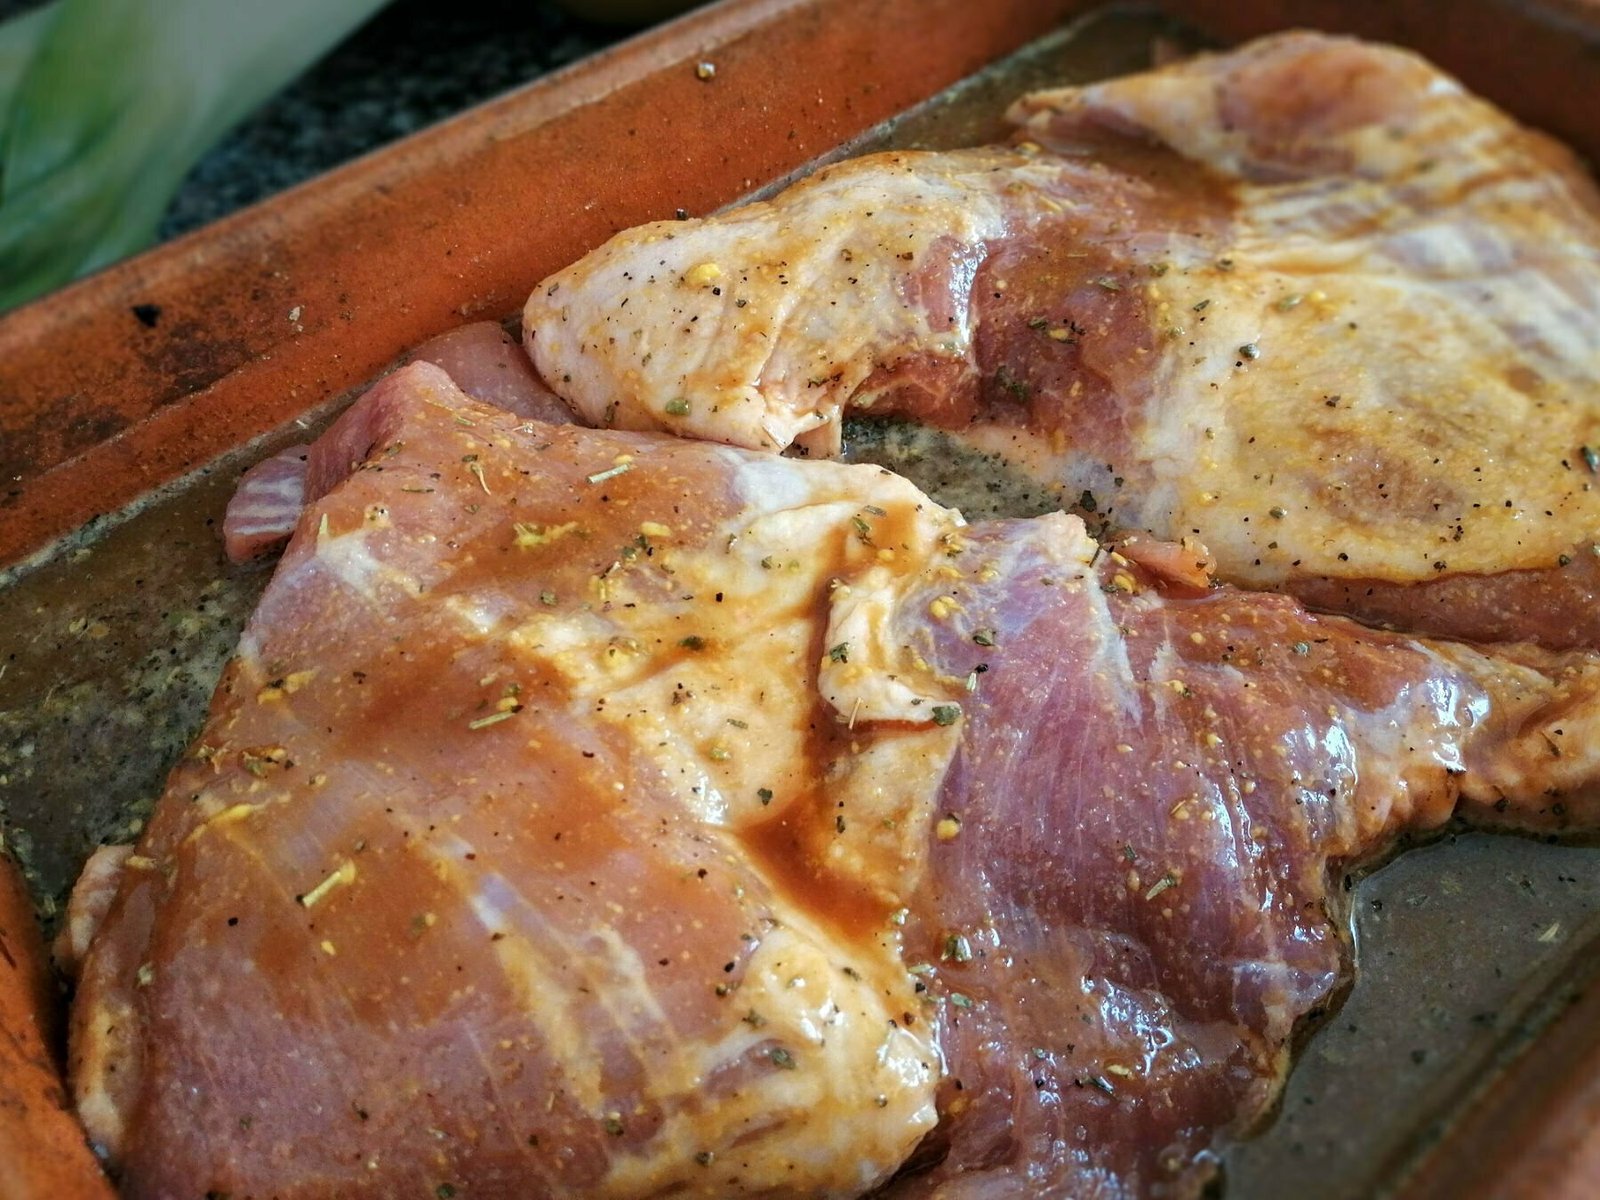 marinaded pork shoulders sit in an earthenware dish